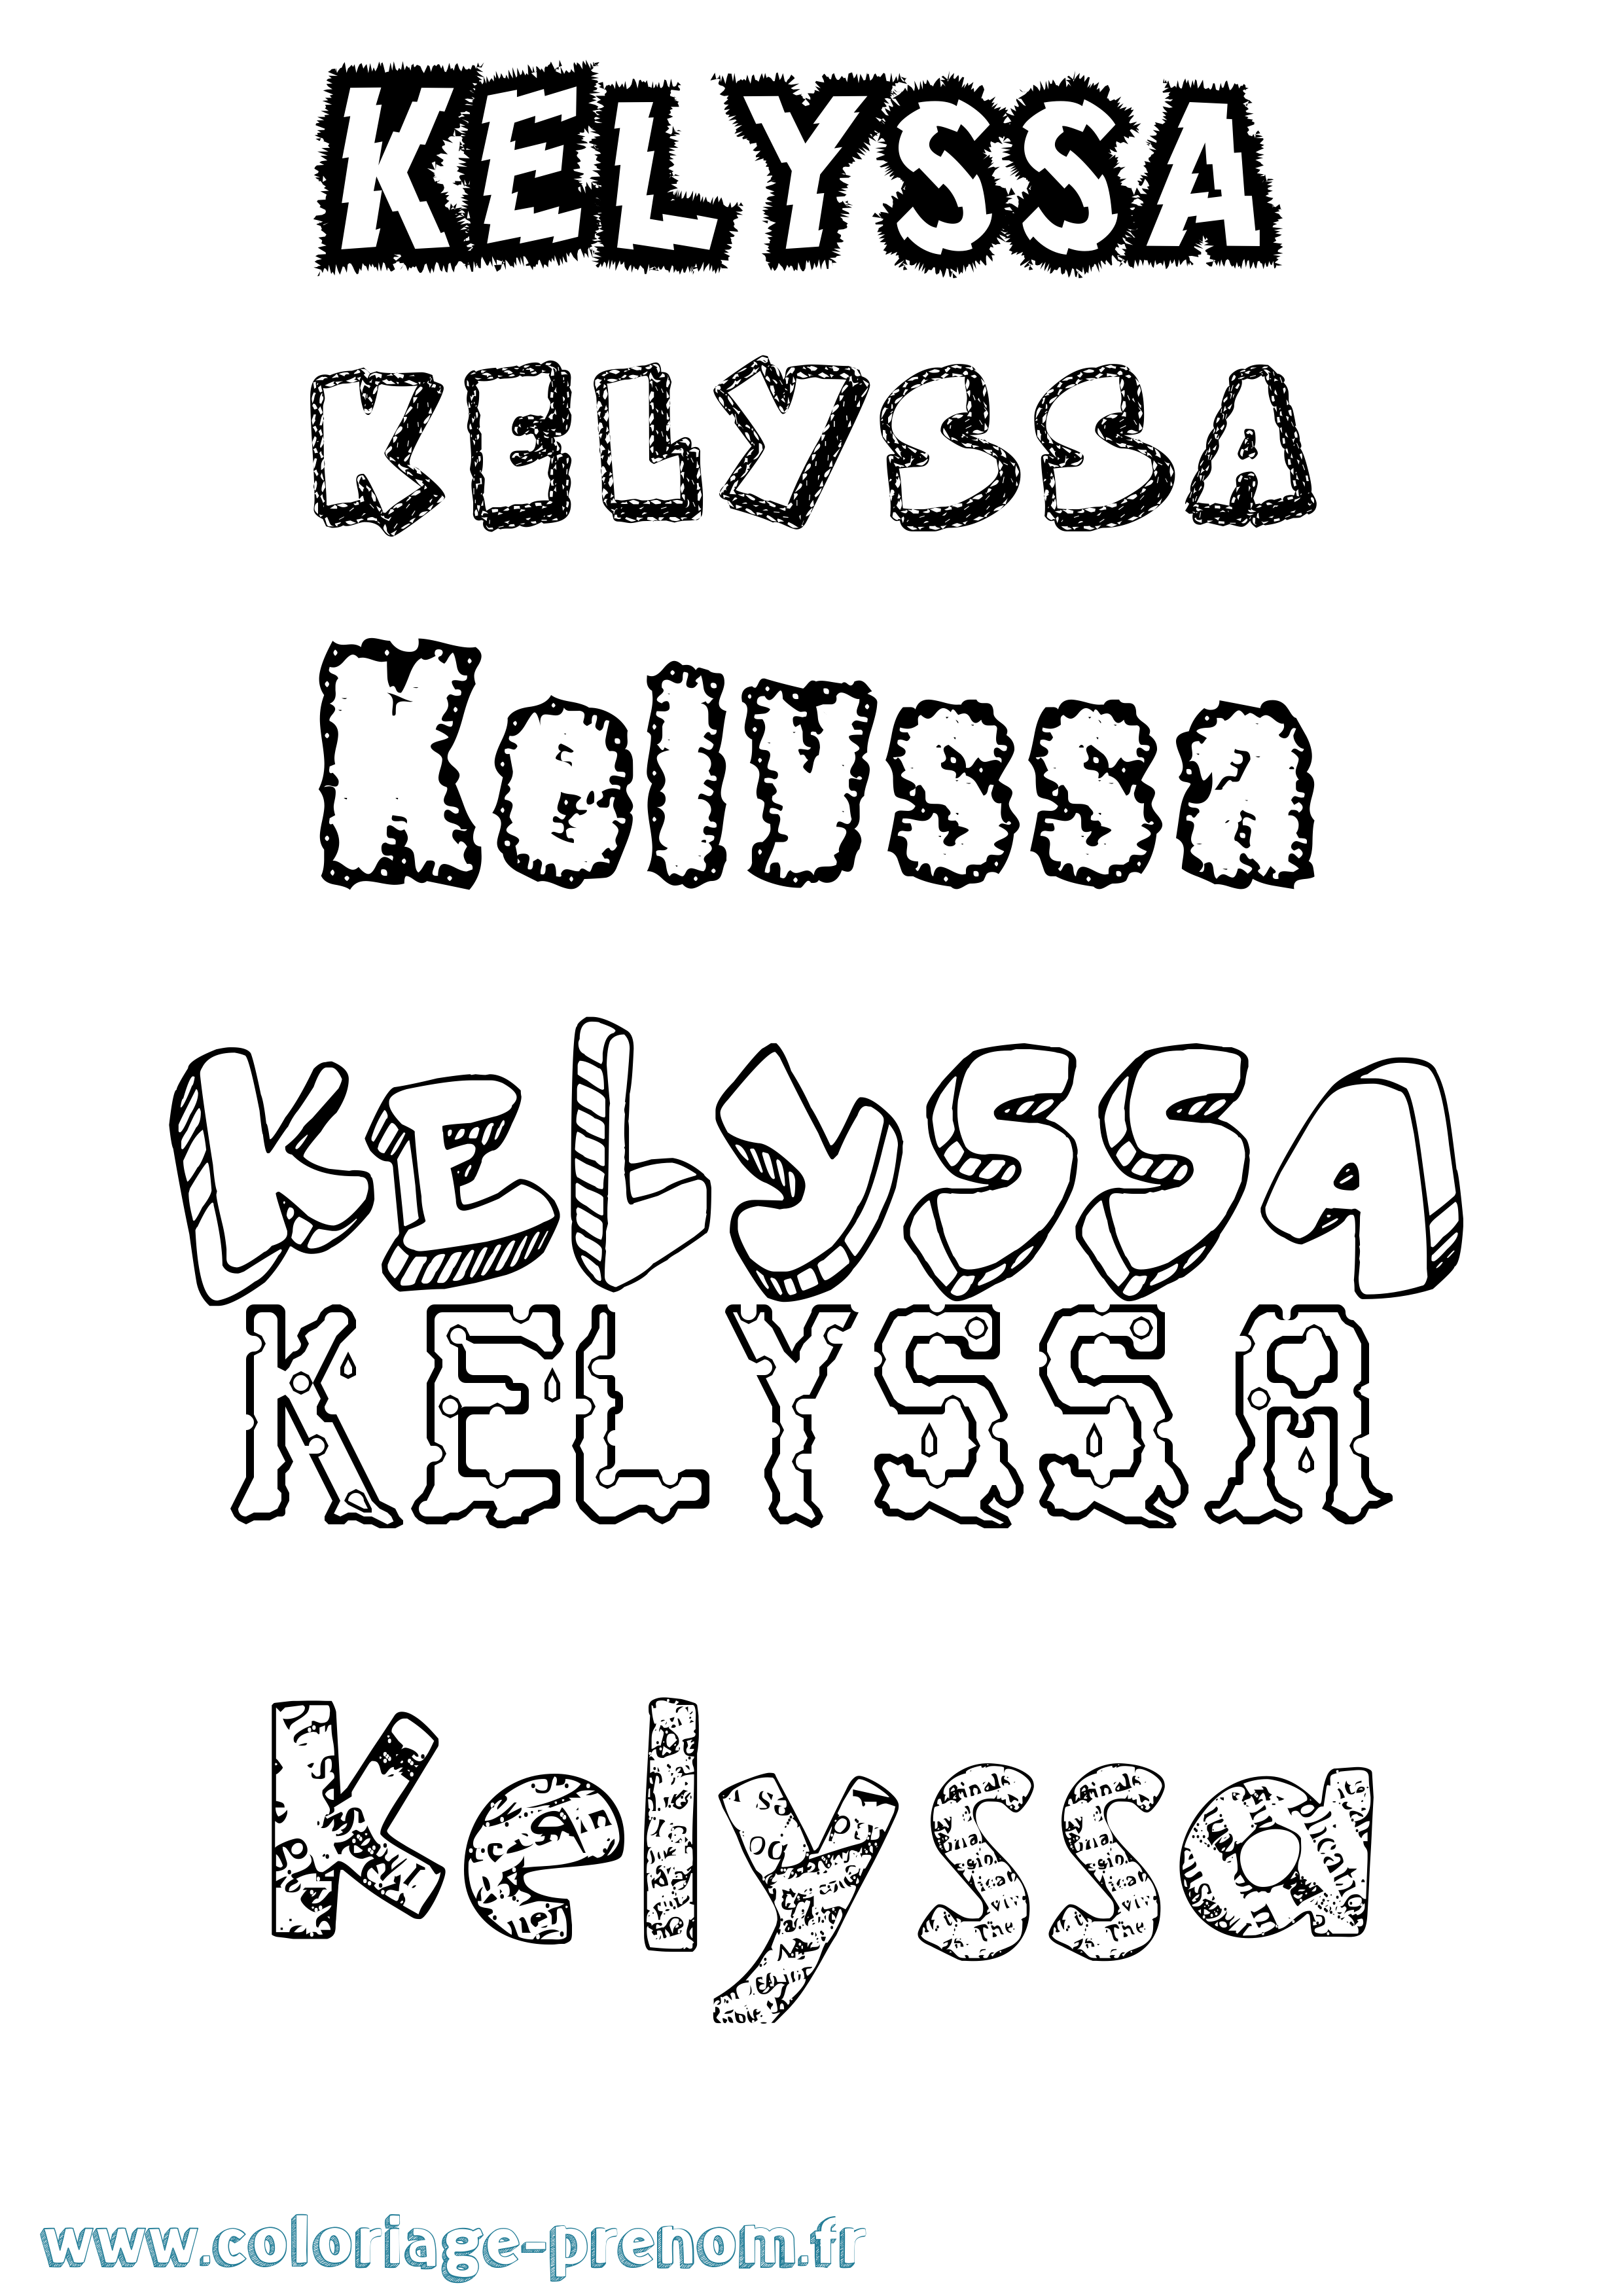 Coloriage prénom Kelyssa Destructuré